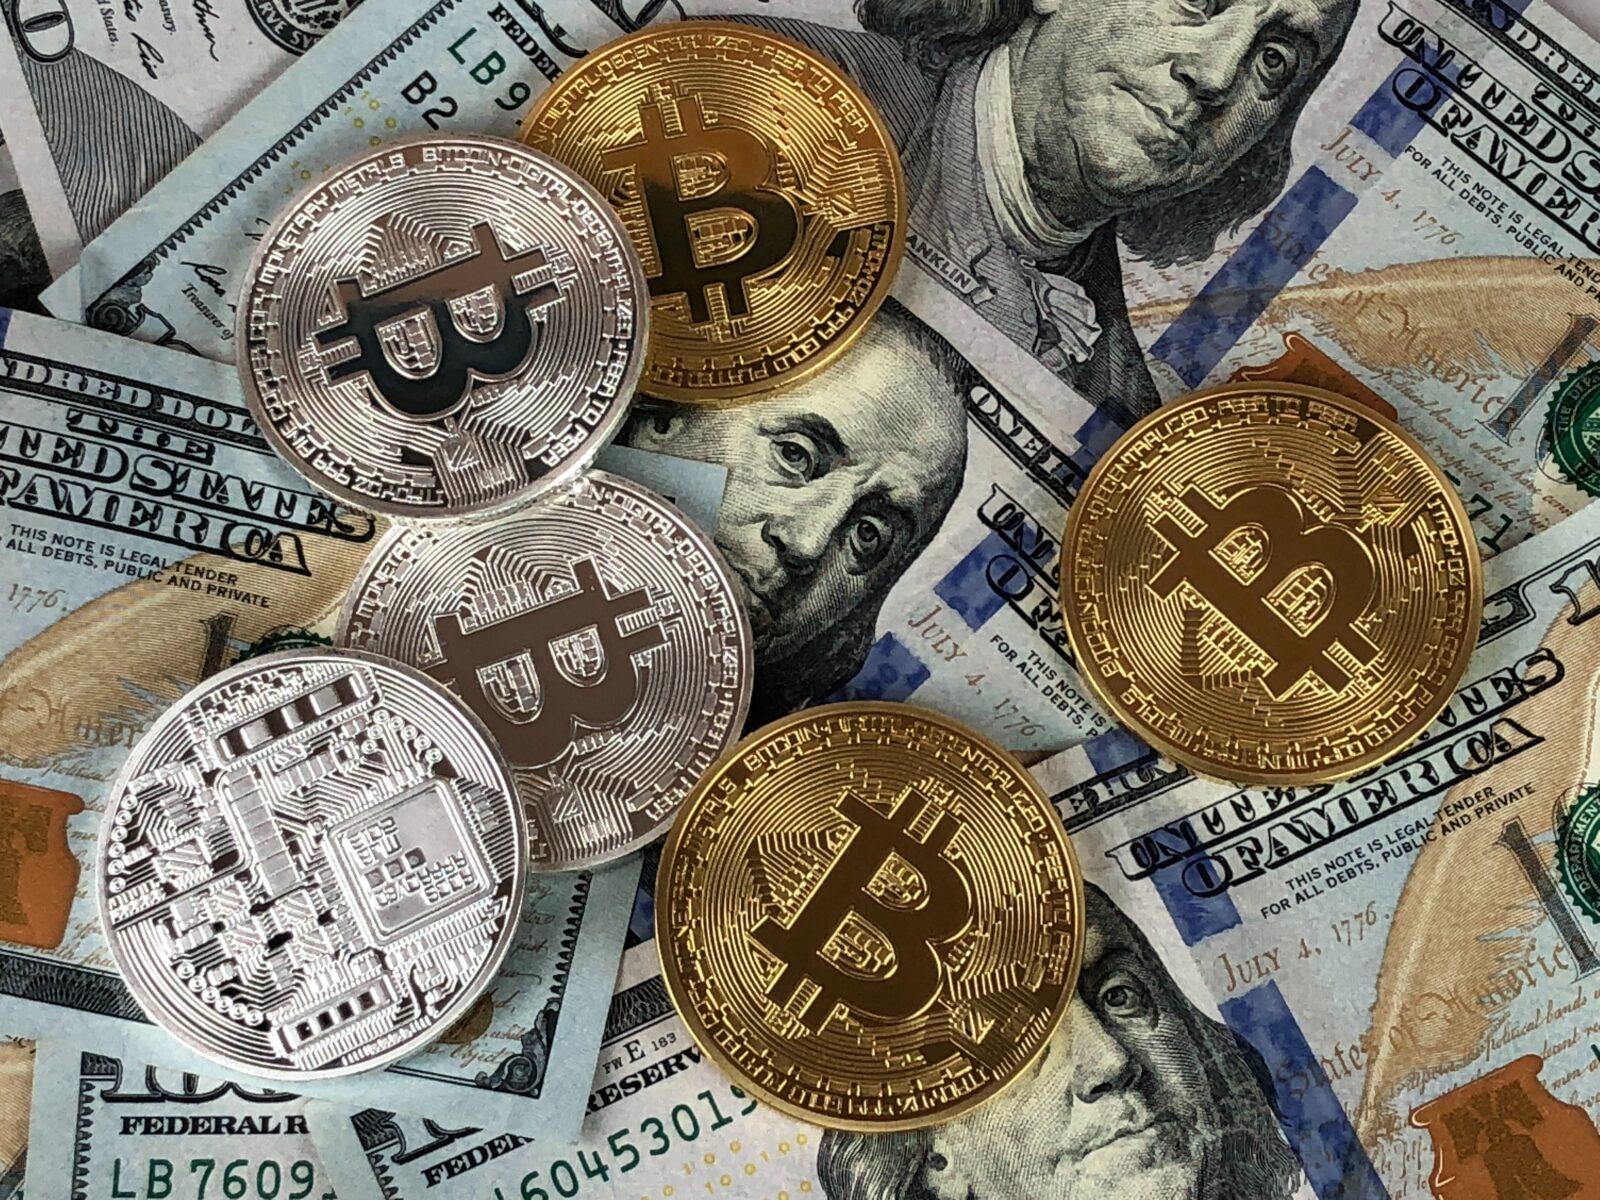 what banks okay with bitcoin